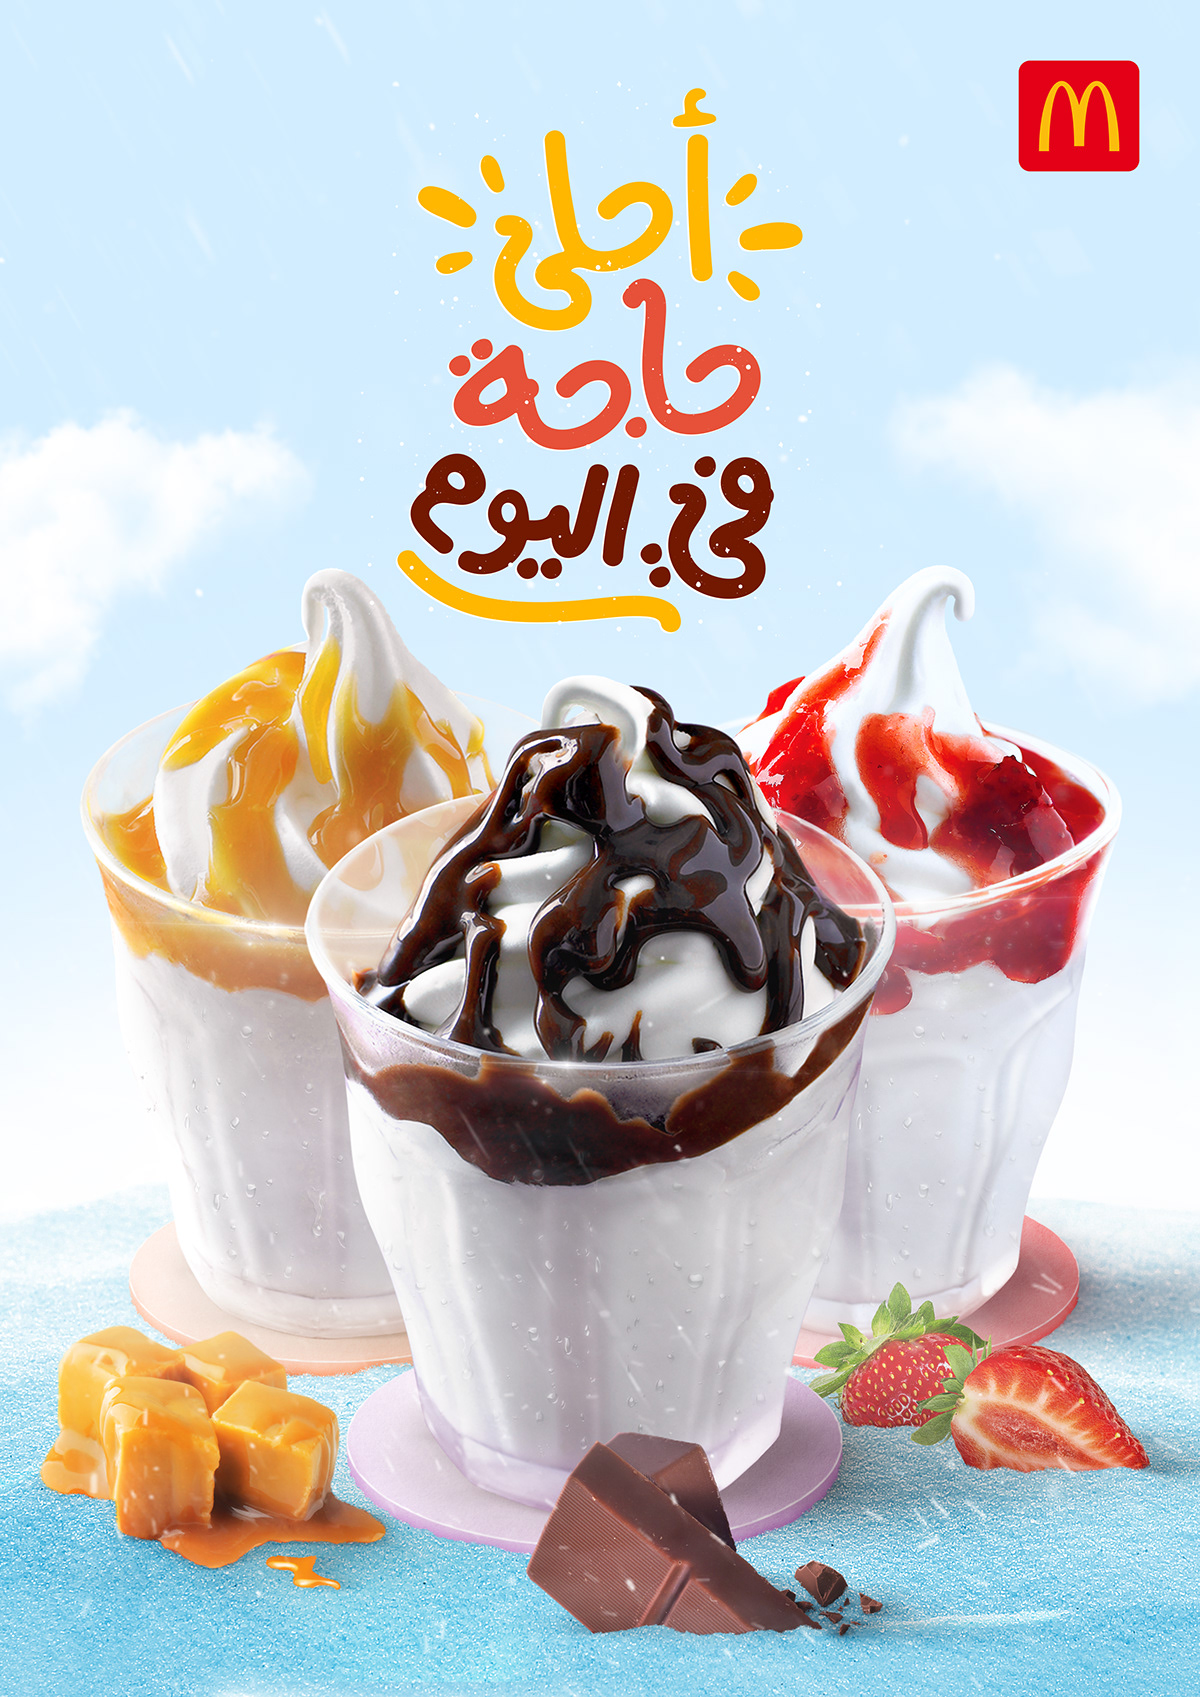 mcdonald's egypt desserts visual digital milkshake sundae flavors post graphic design 